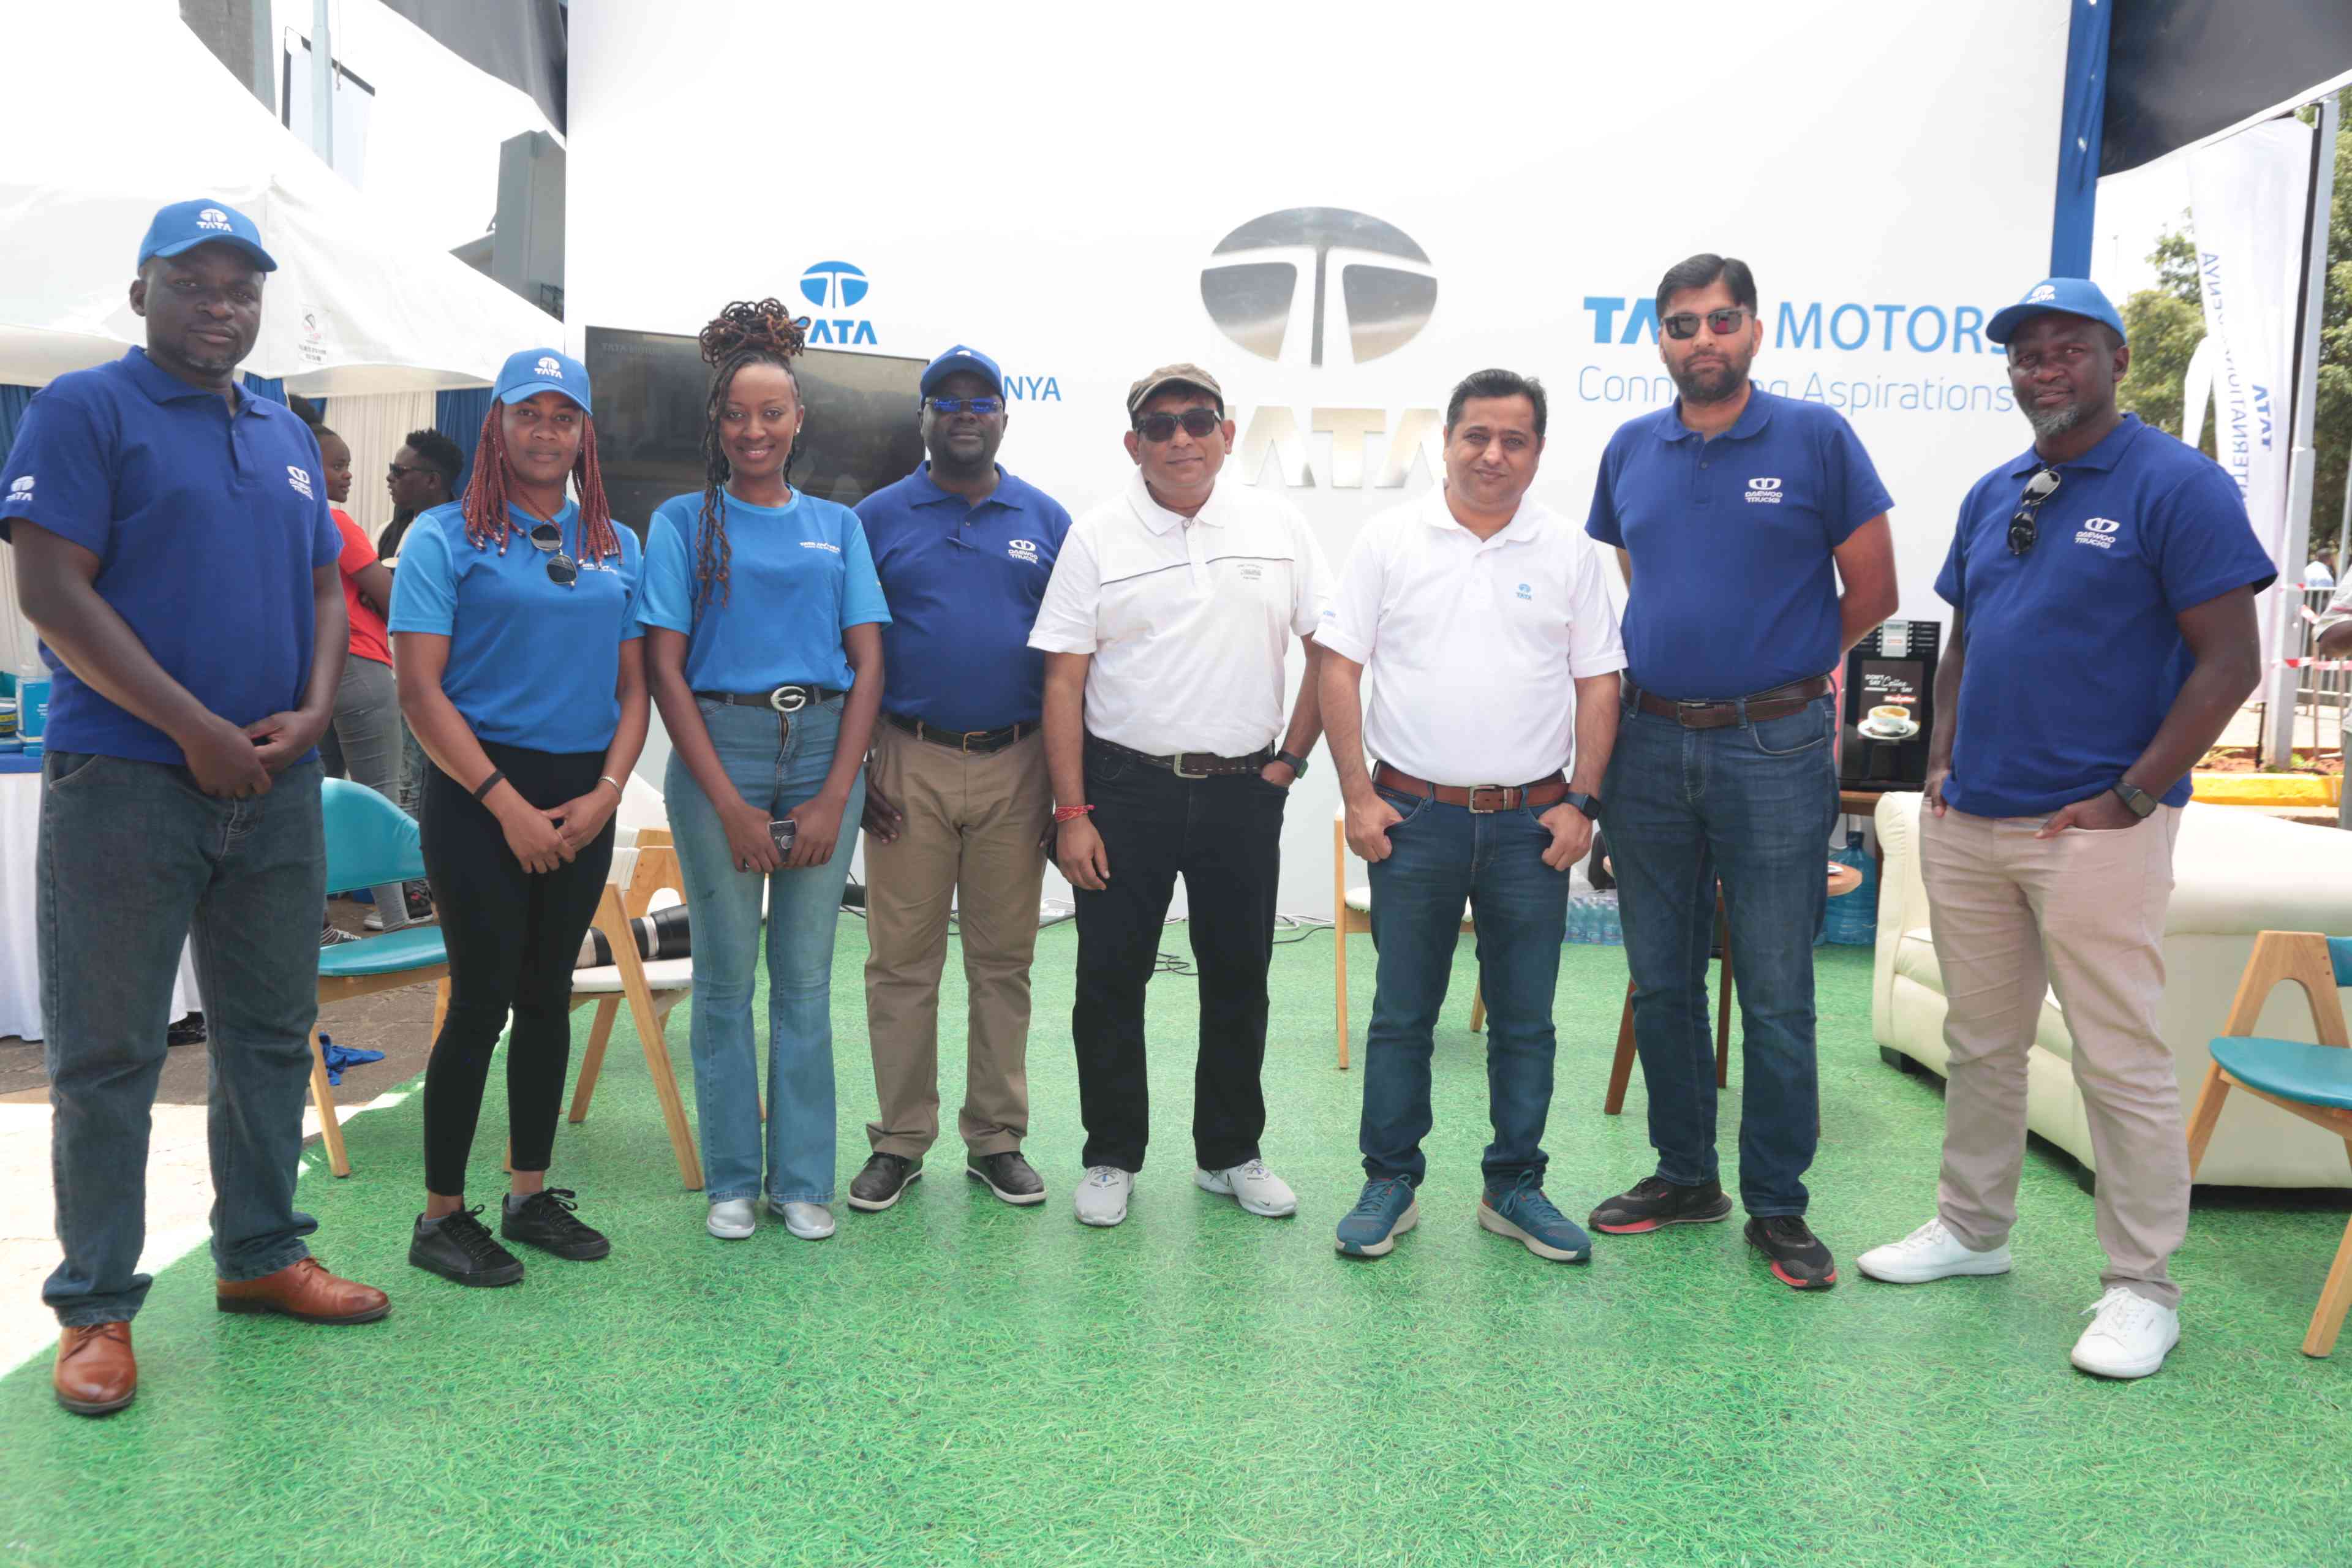 The TATA Motors team at their tent